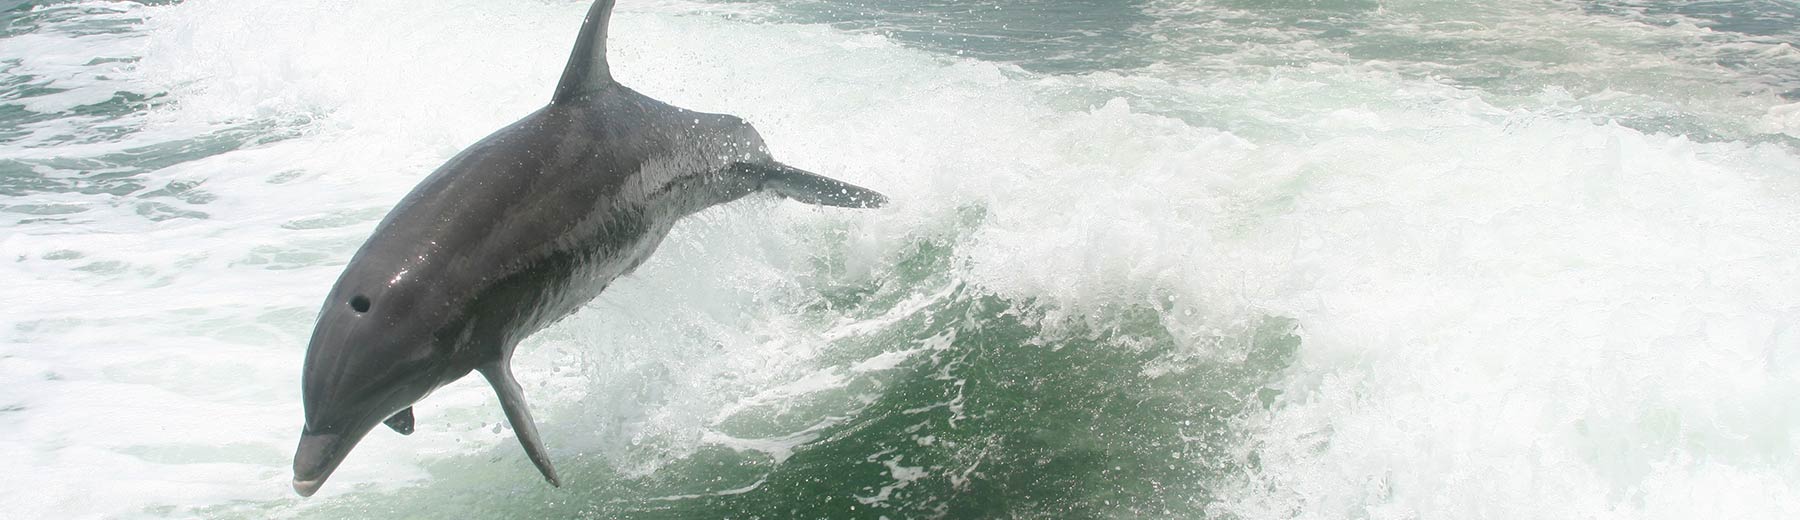 dolphin swimming near the beach in Florida